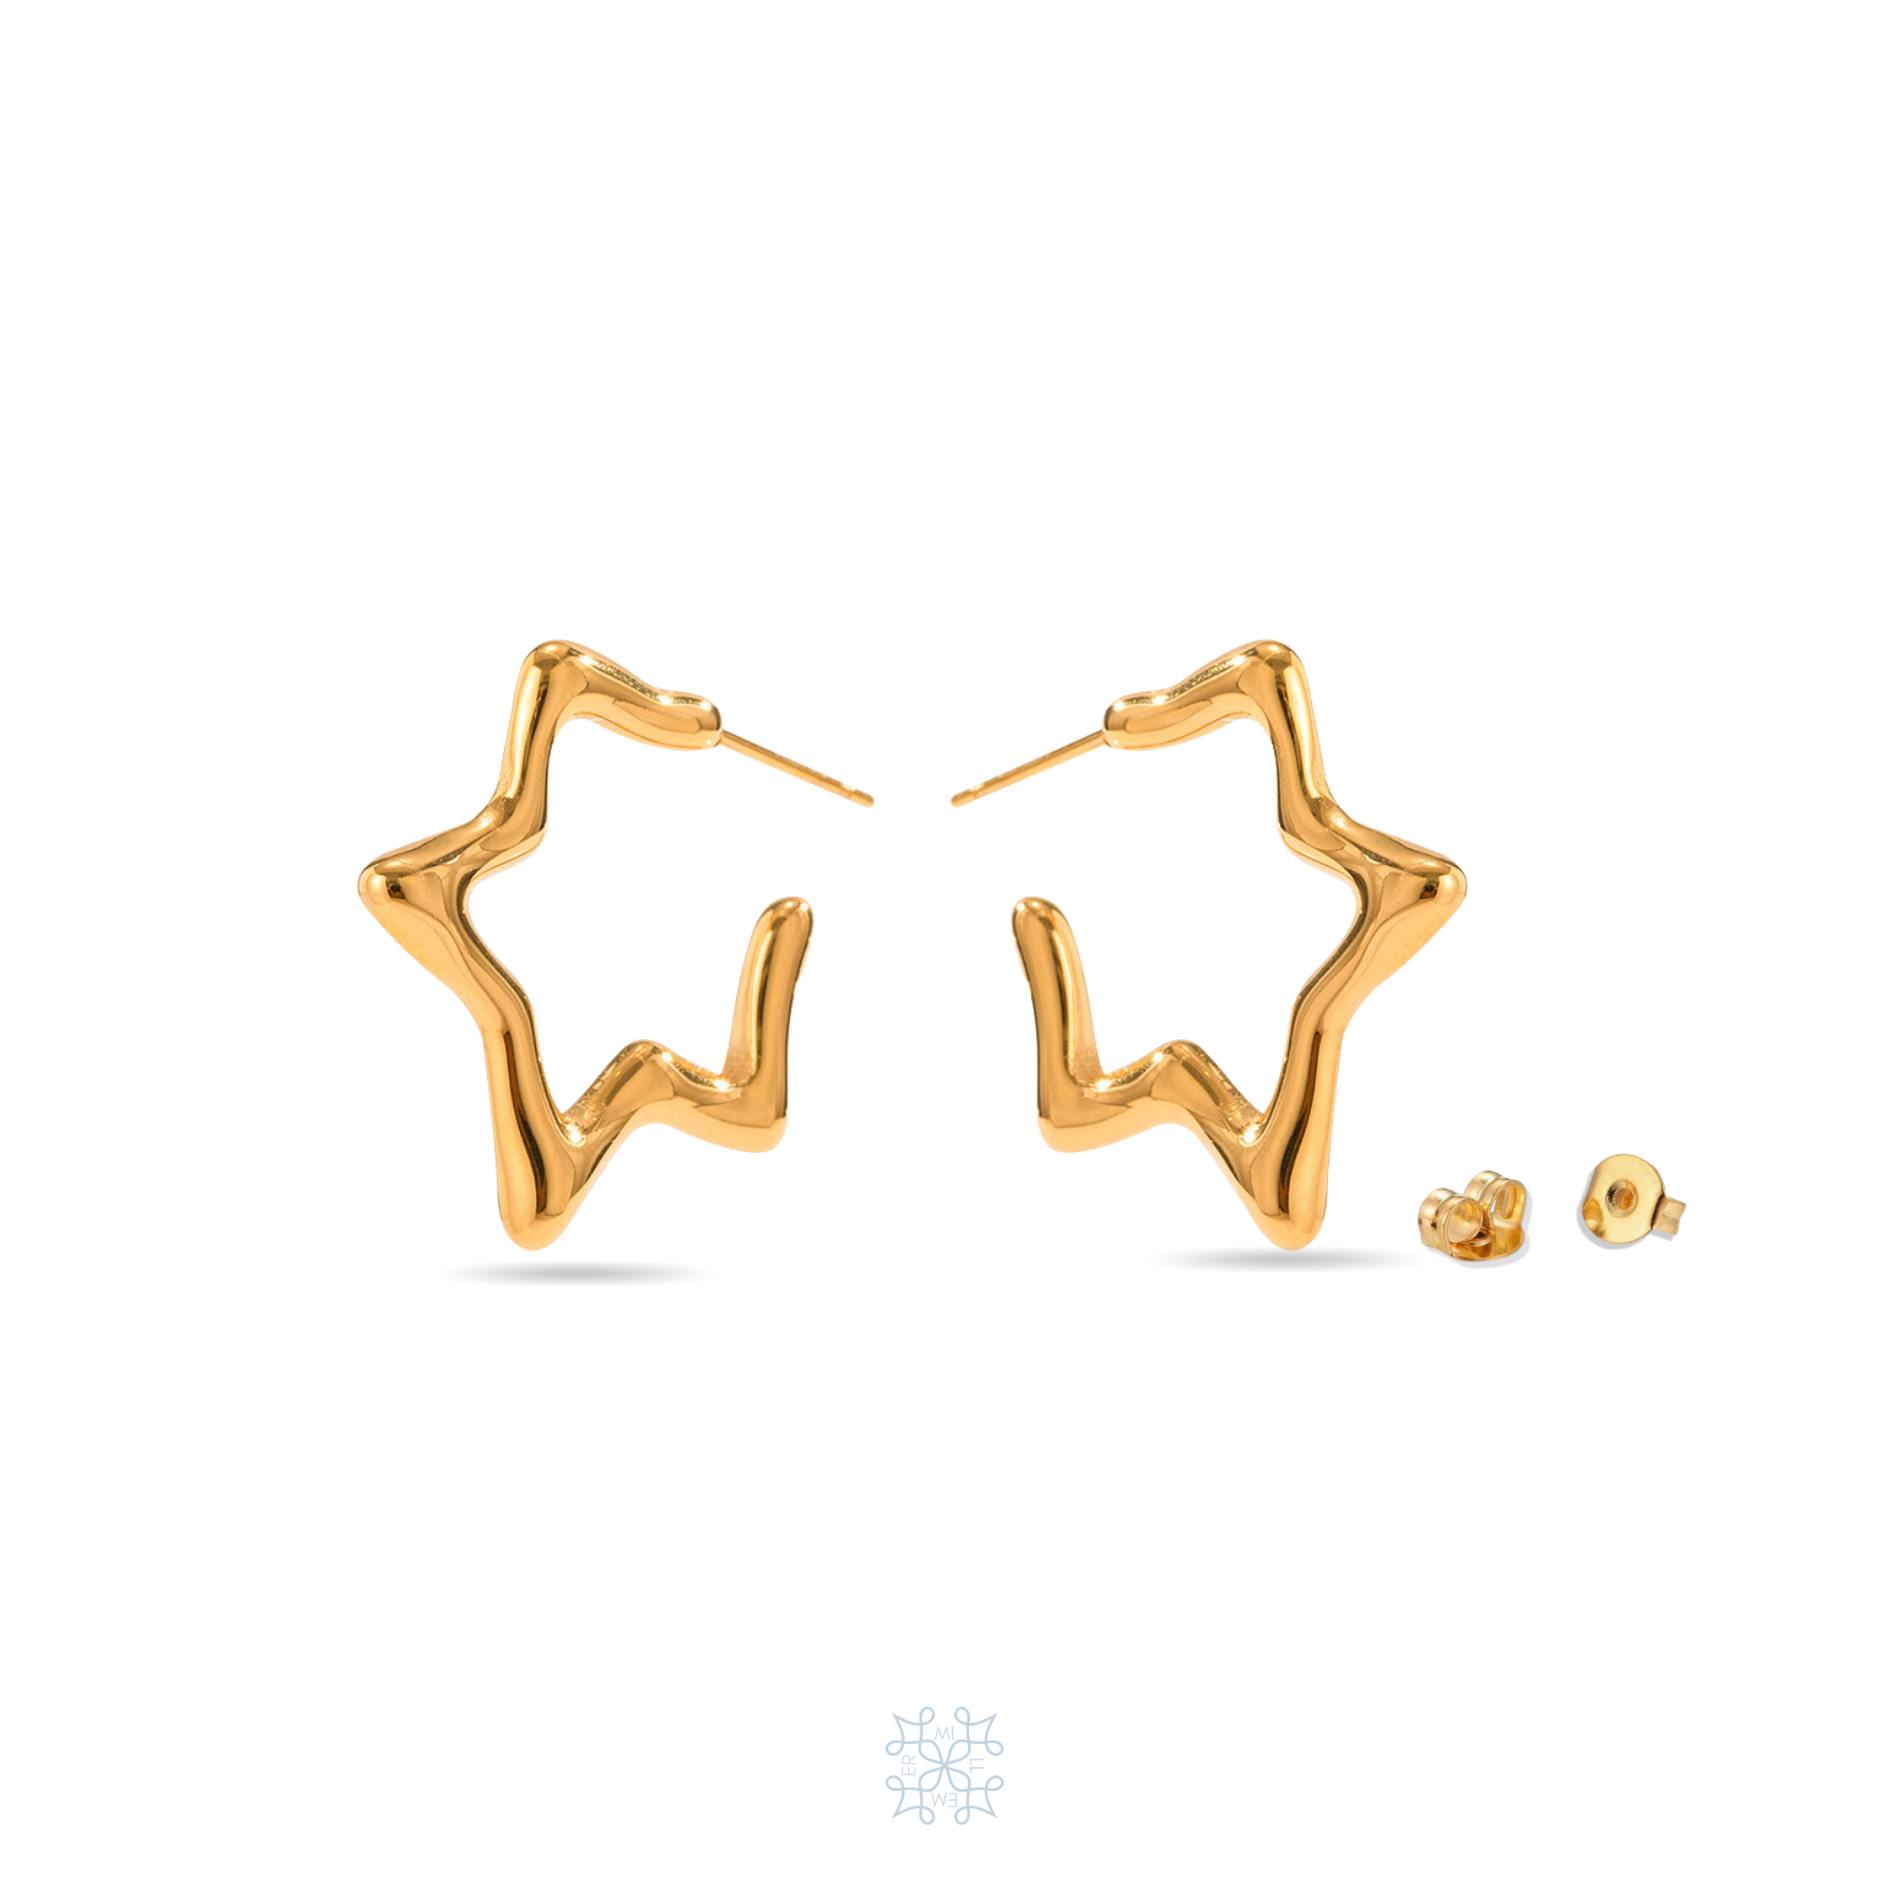 Star shaped gold hoop earrings. Irregular star shape pair of earrings.